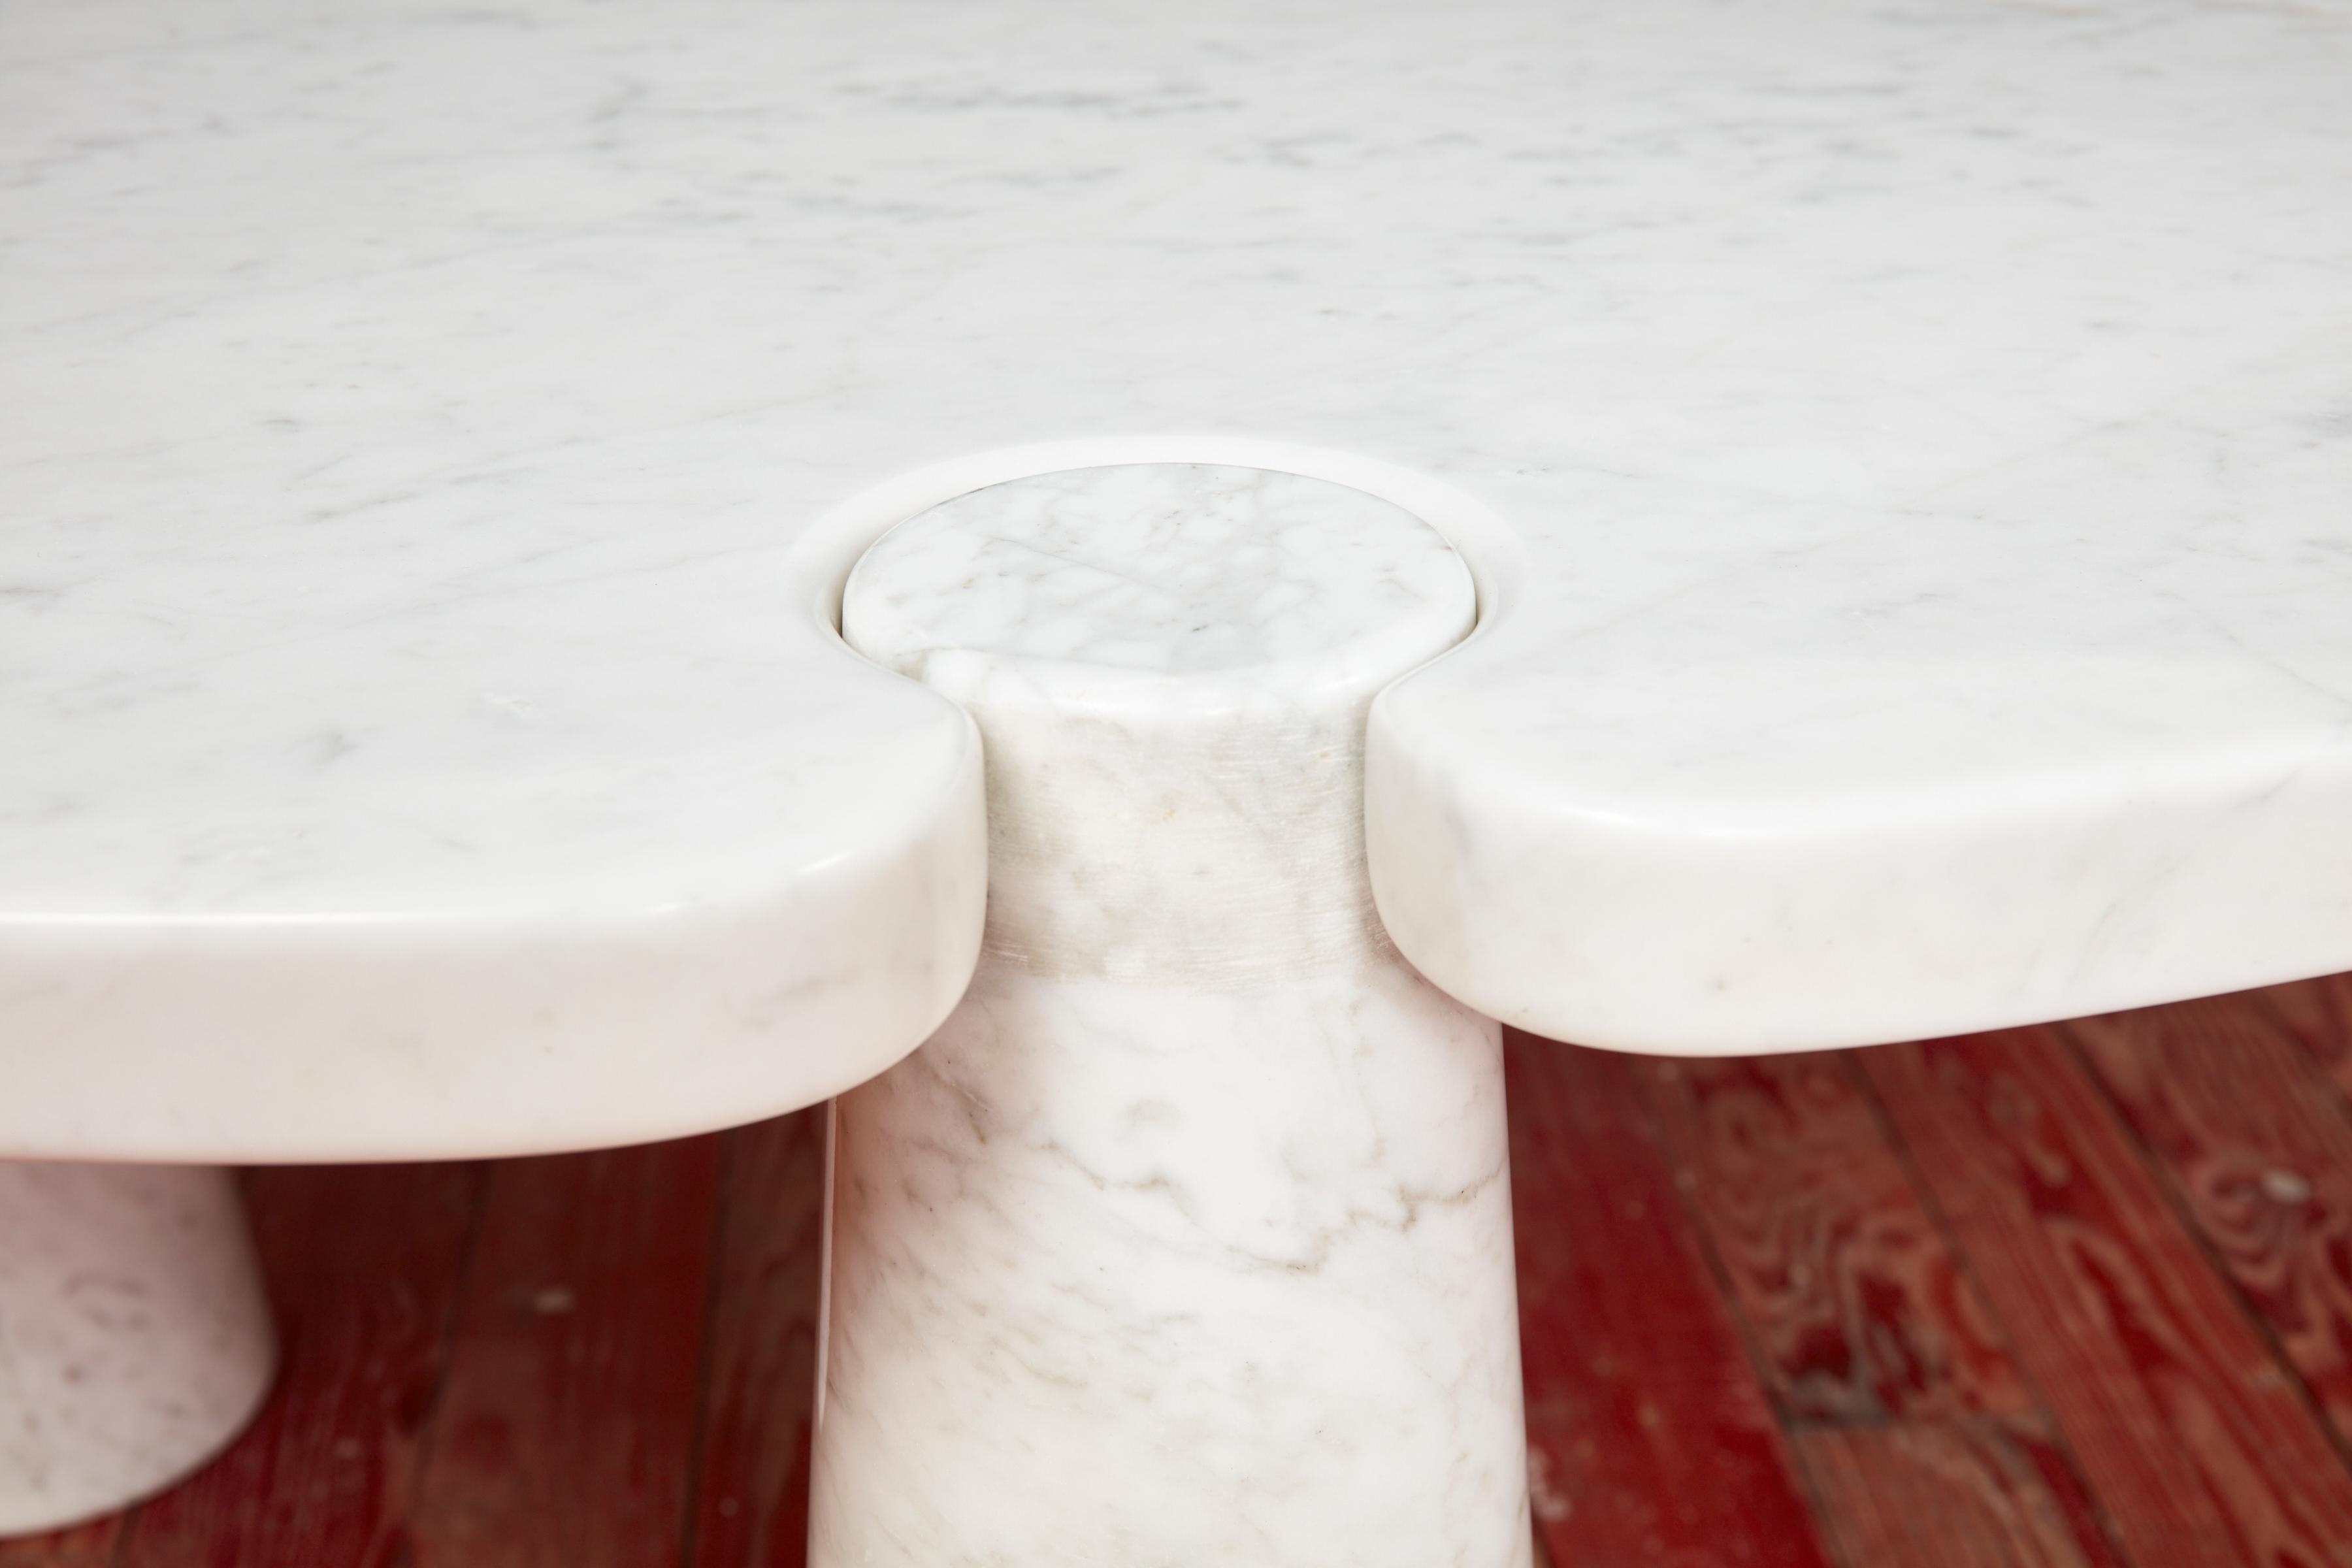 Carrara Marble Massive Angelo Mangiarotti Dining Table